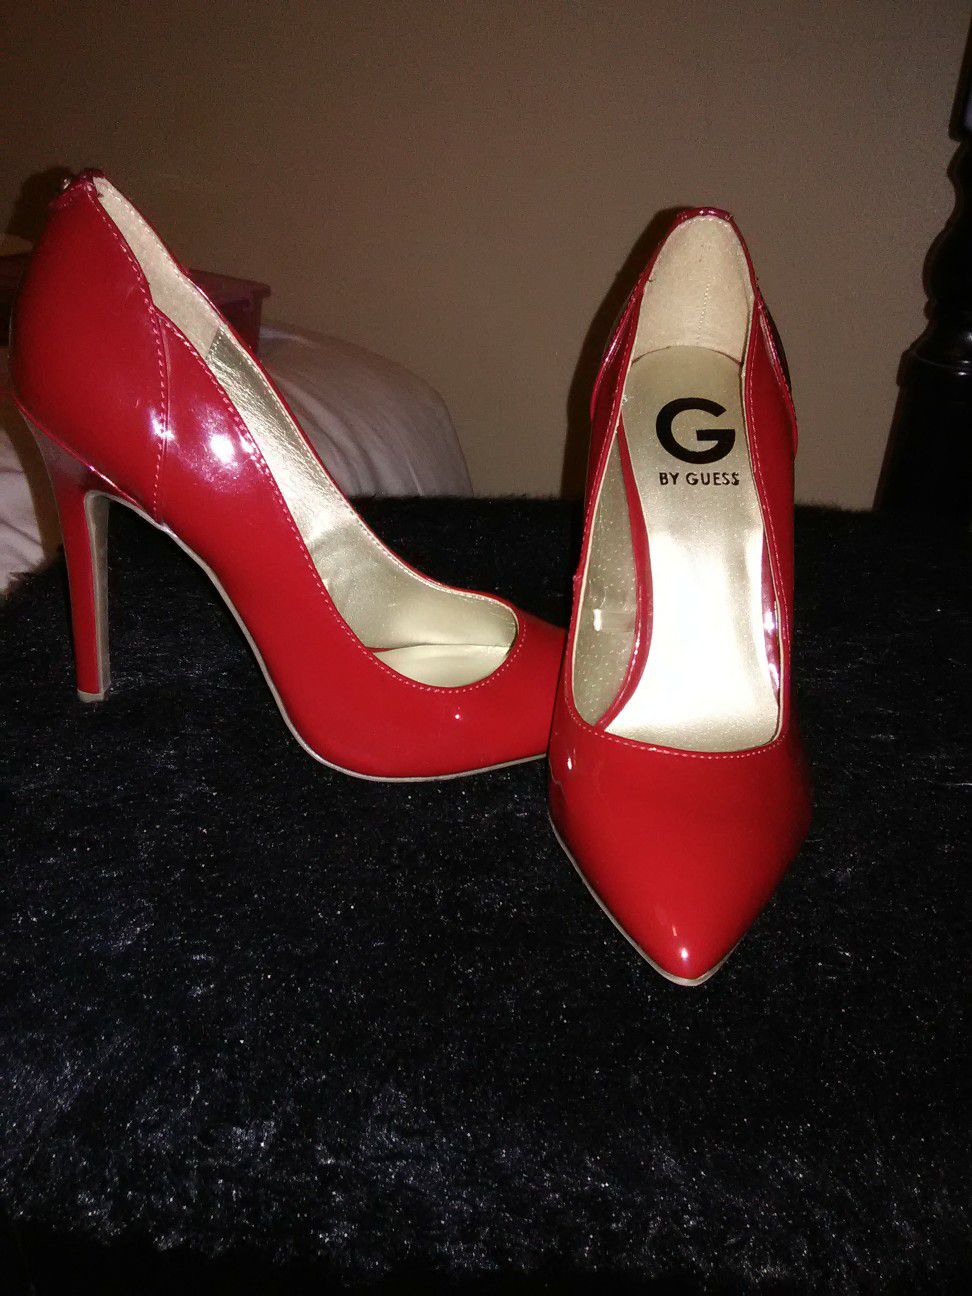 Size seven heels brand new